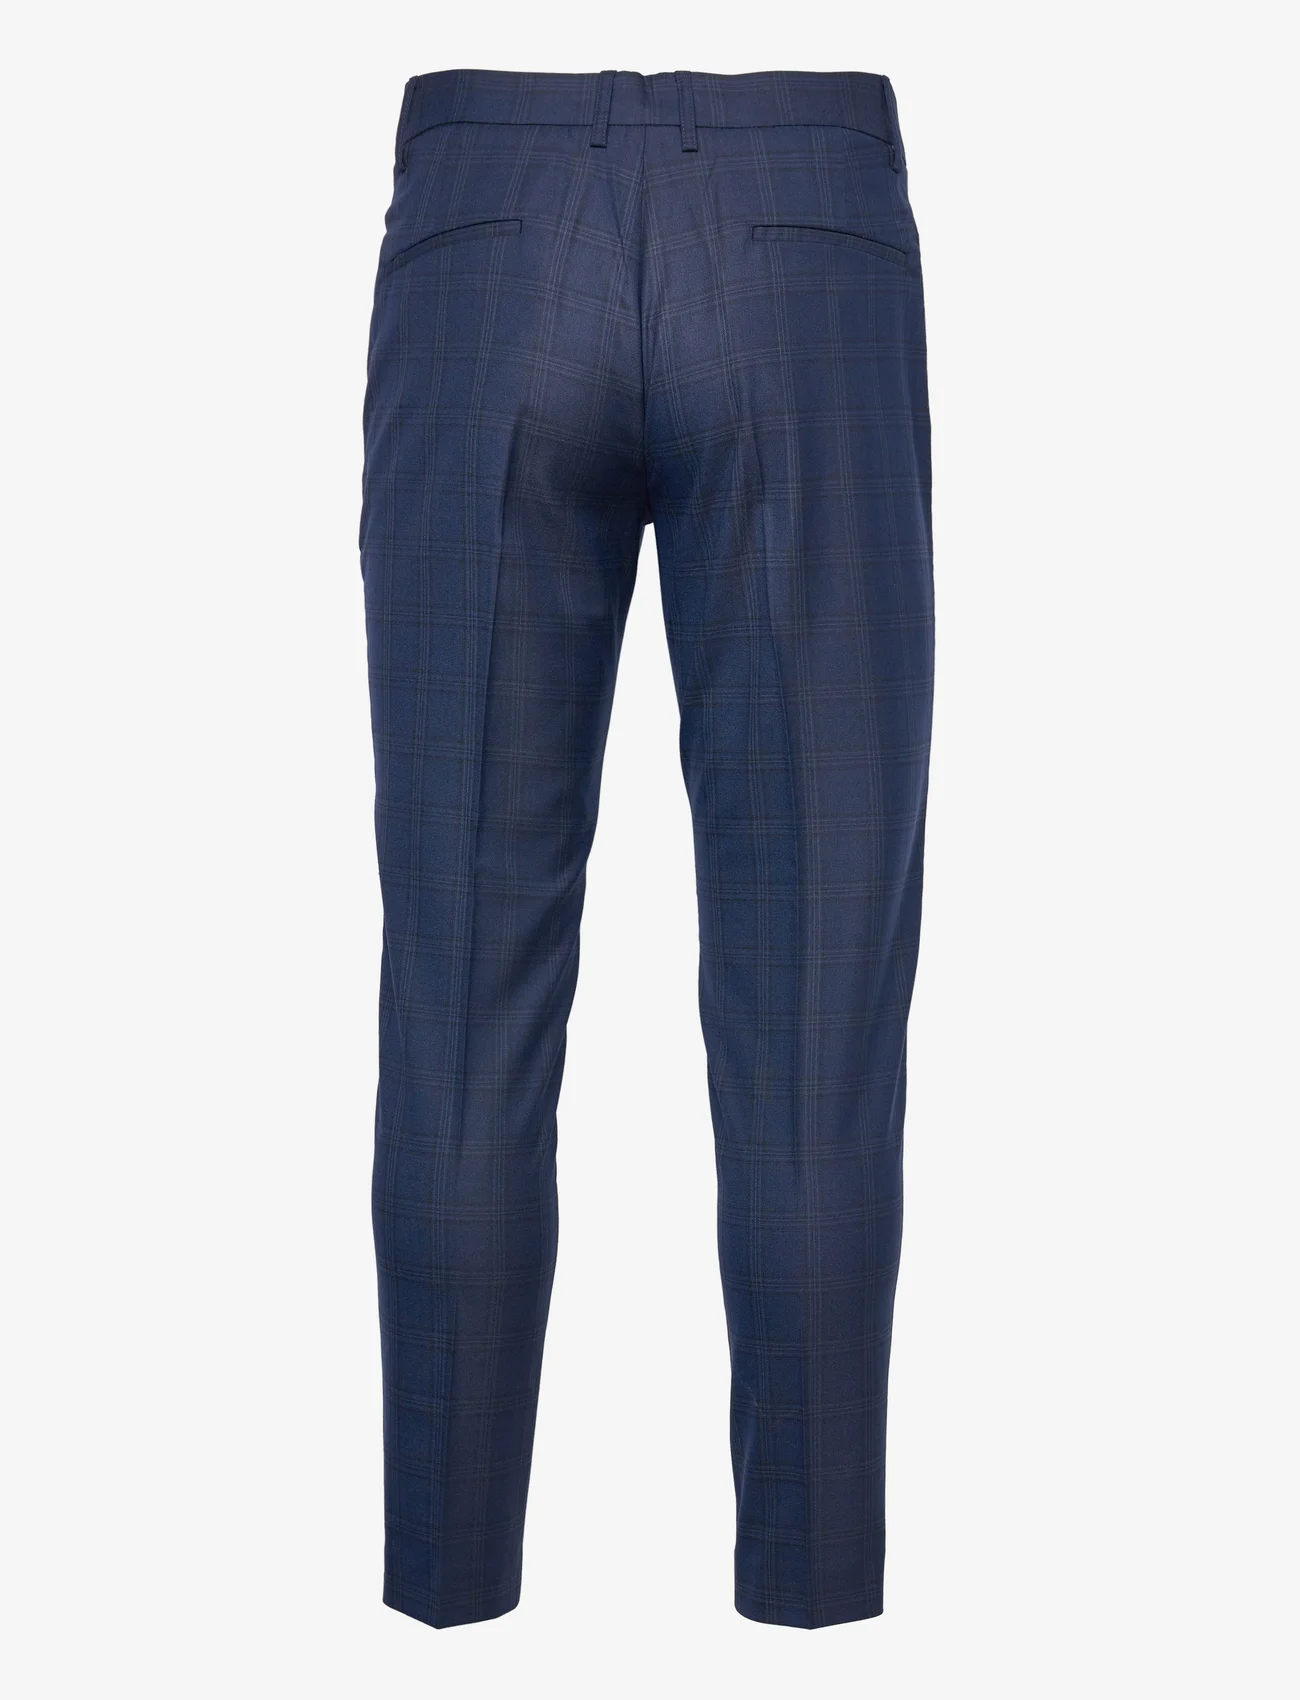 Lindbergh - Checked stretch club pants - jakkesætsbukser - dk blue - 1